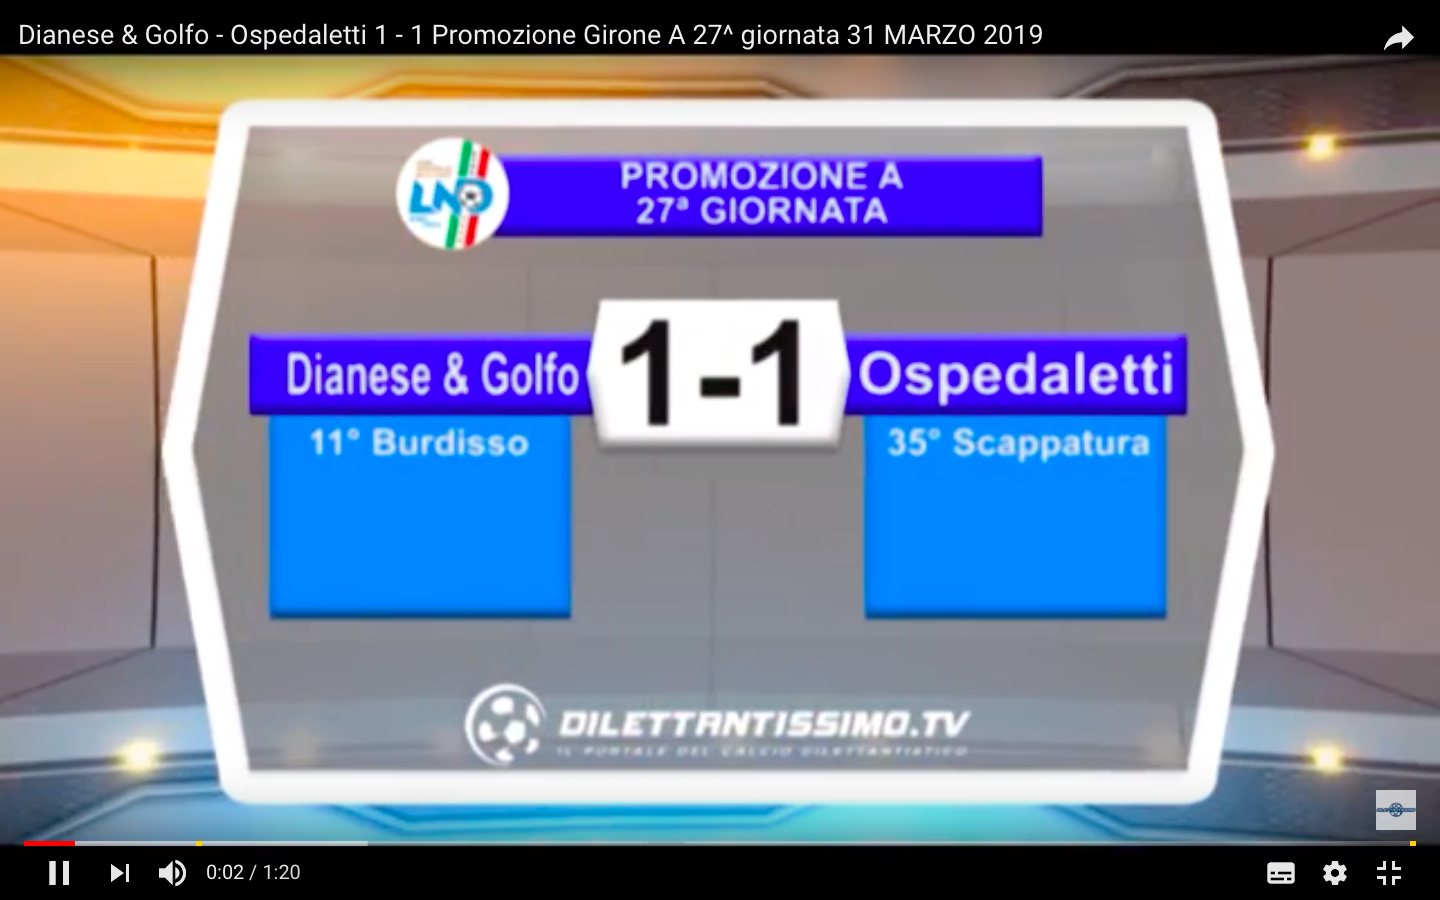 VIDEO: DIANESE & GOLFO- OSPEDALETTI 1-1